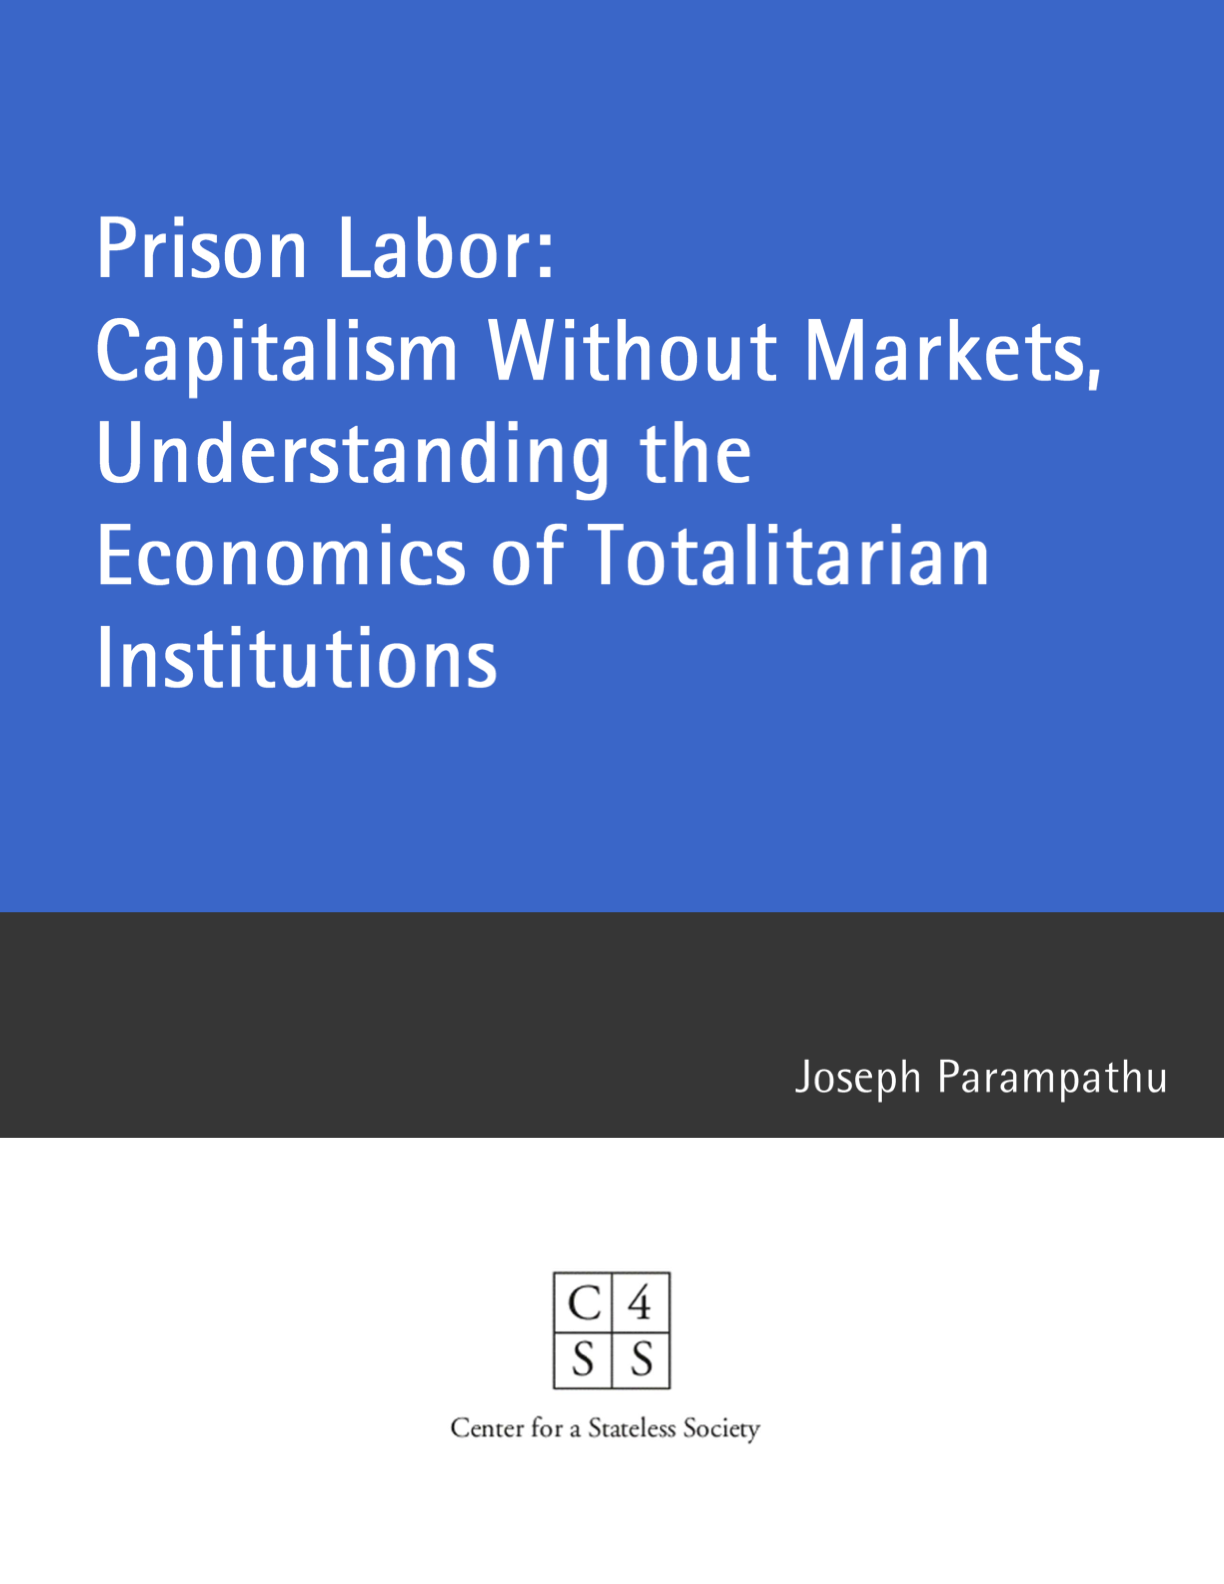 j-p-joseph-parampathu-prison-labor-capitalism-with-6.png